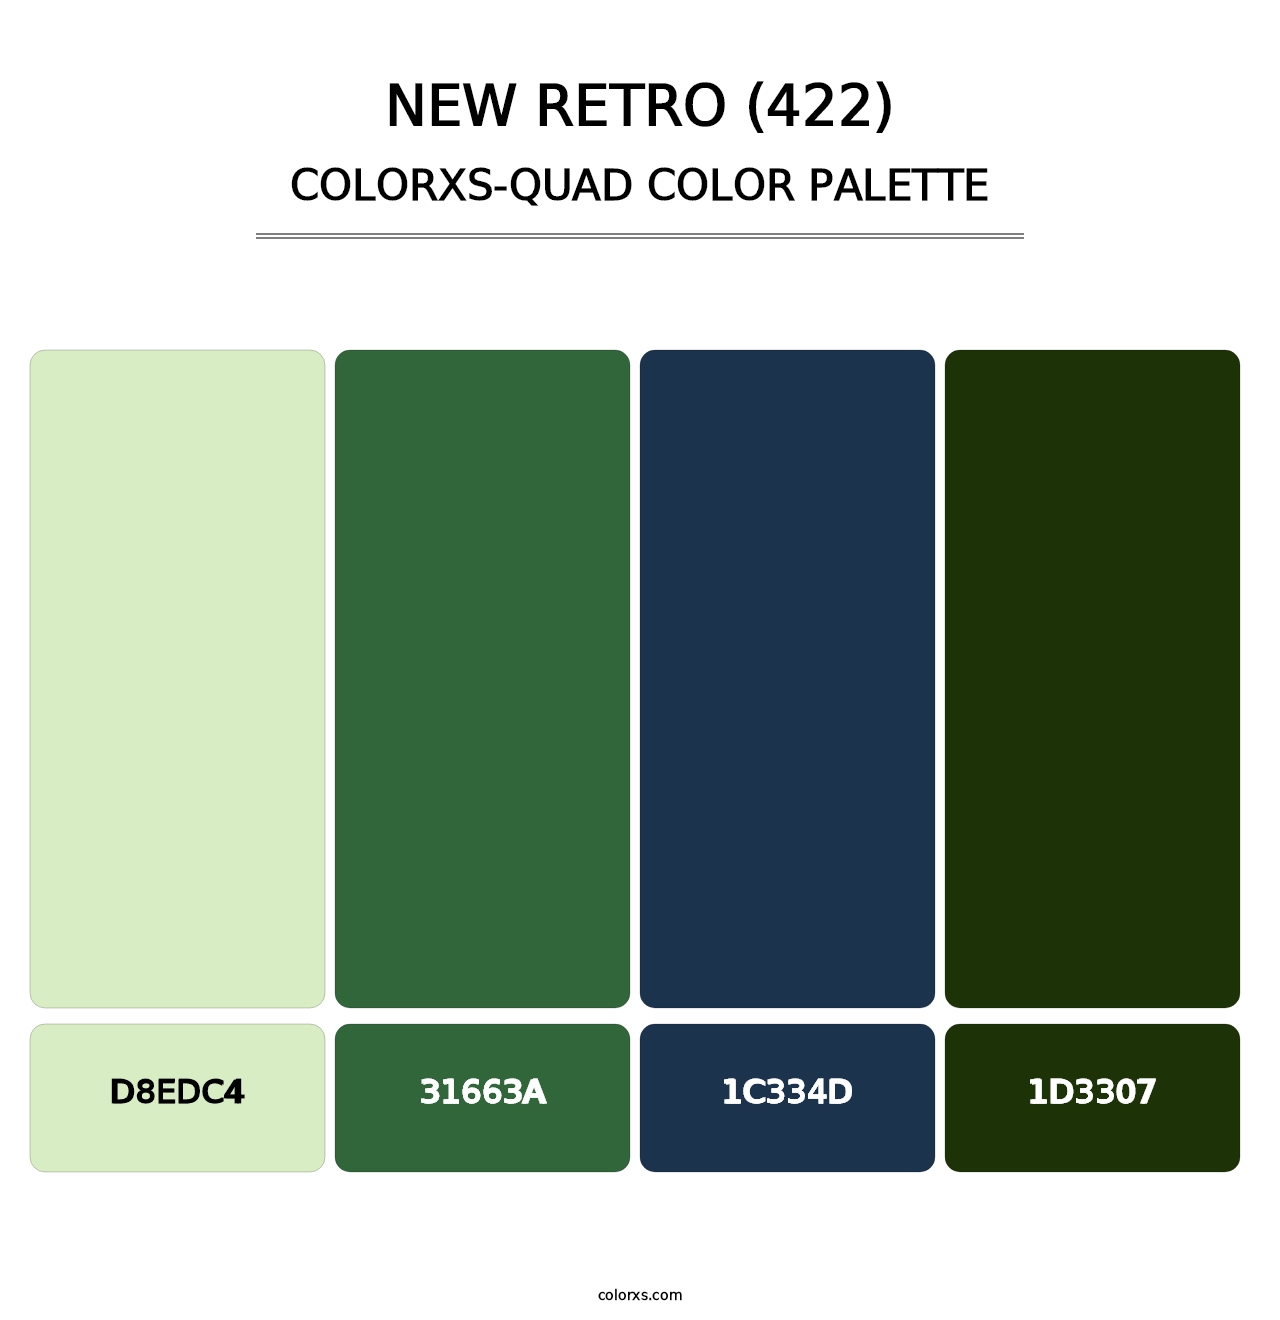 New Retro (422) - Colorxs Quad Palette